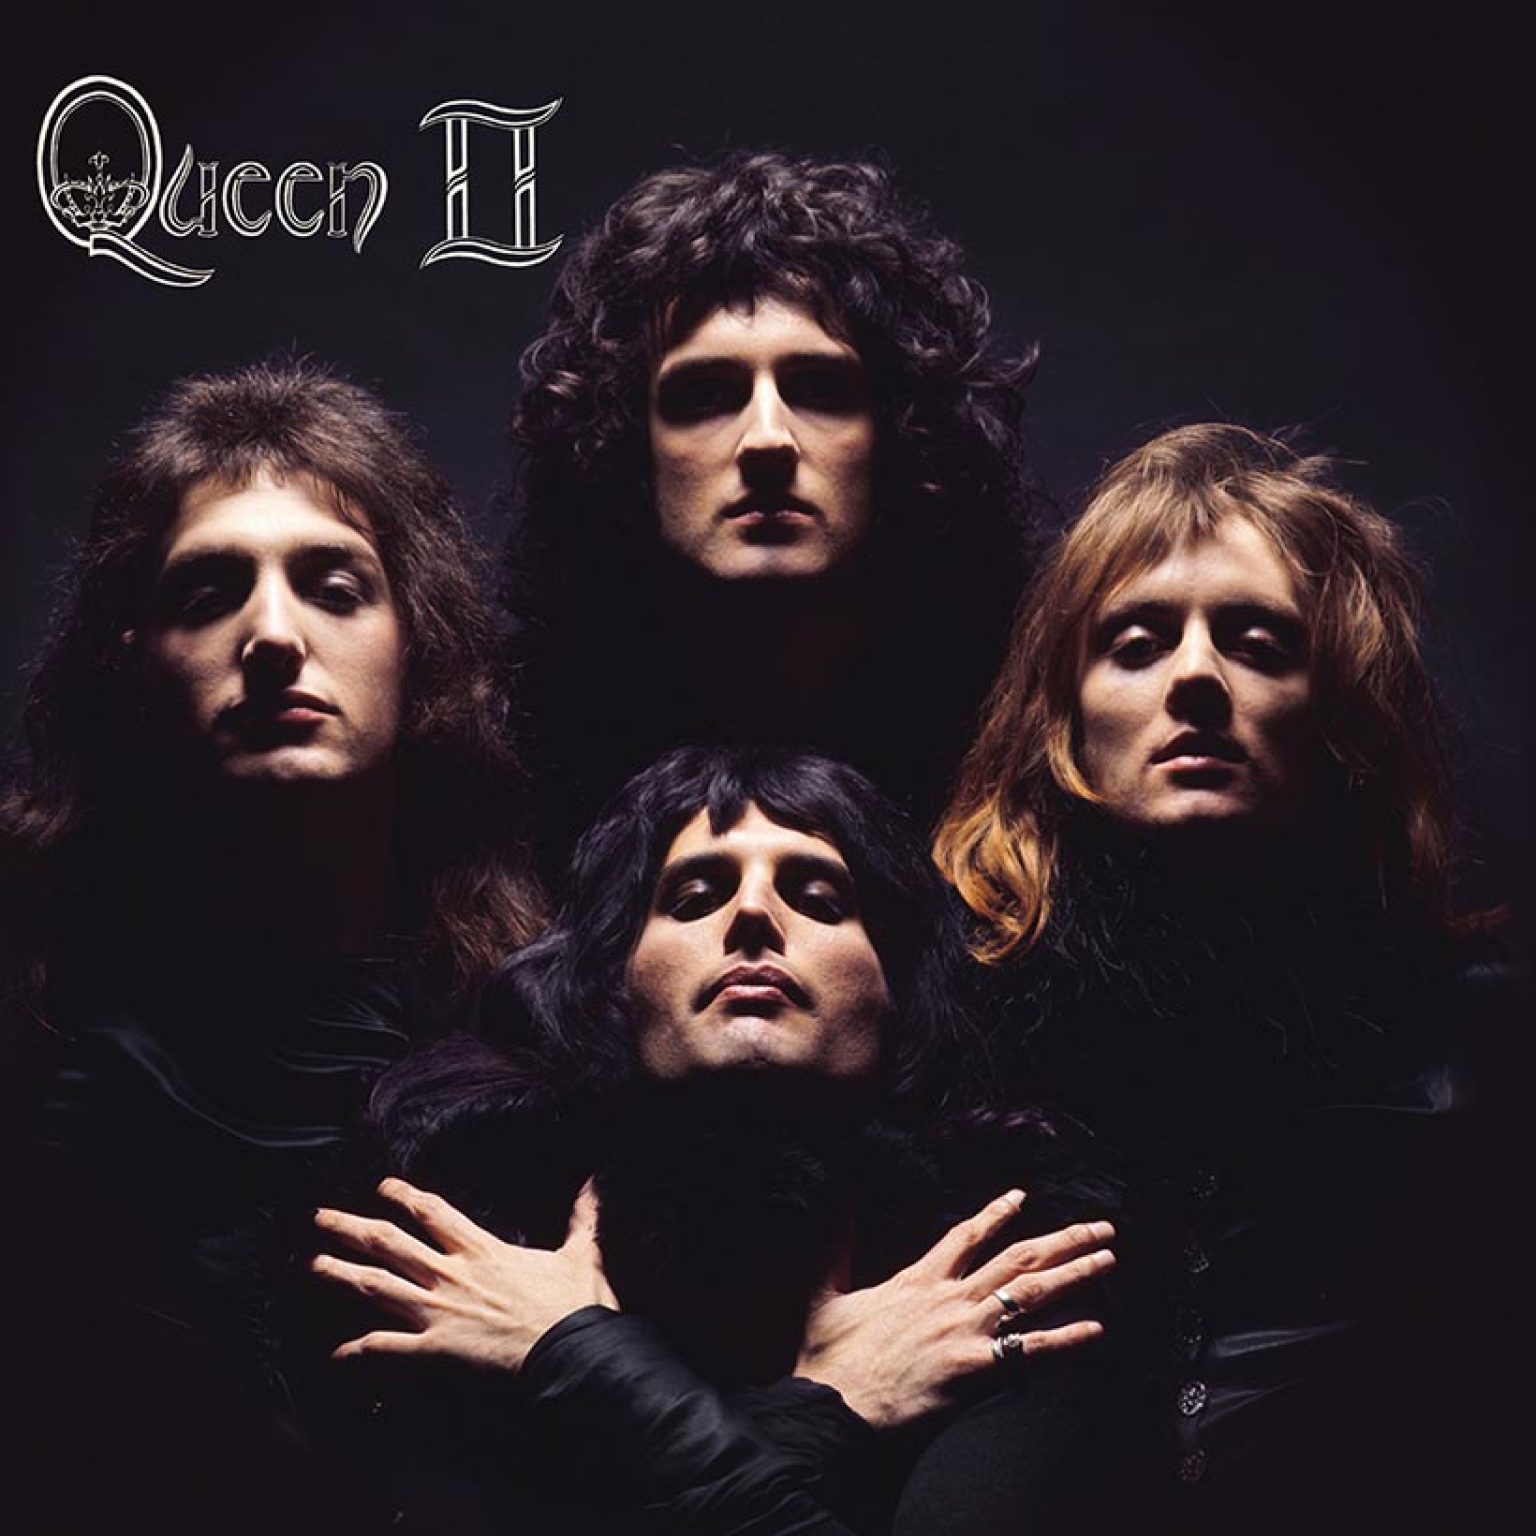 PORTADAS. TOP 5 - Página 4 Queen-II-album-cover-820-1536x1536-1